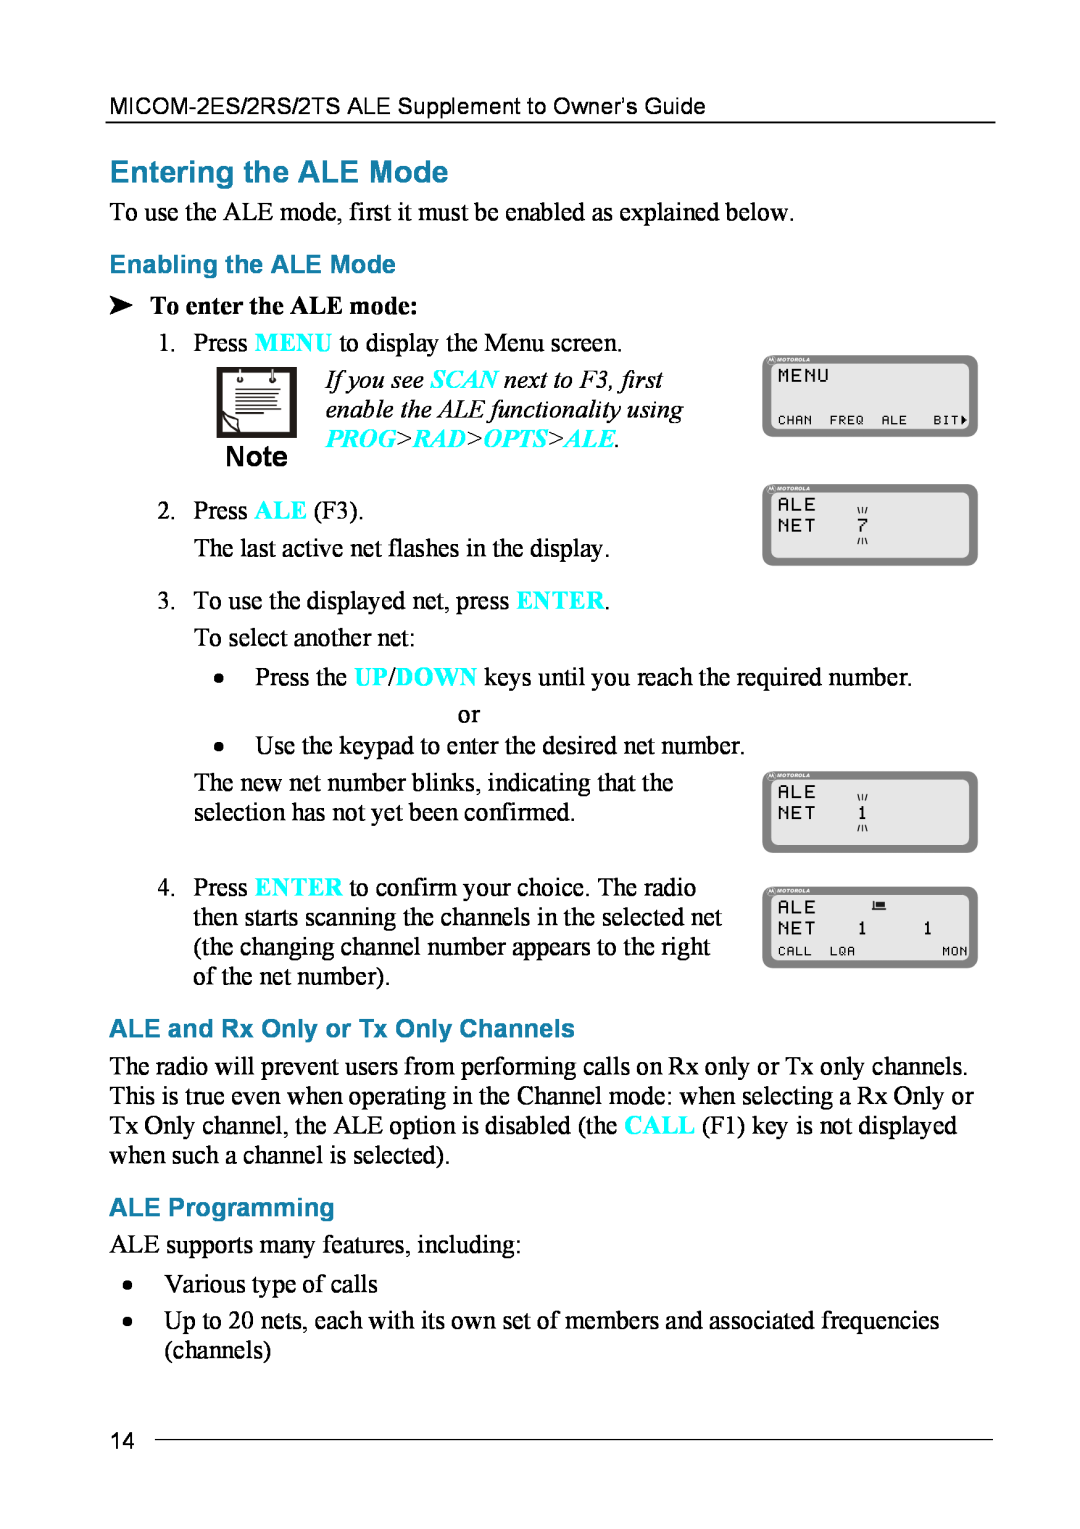 Motorola MICOM-2ES/2RS/2TS ALE manual Entering the ALE Mode, Enabling the ALE Mode, ALE and Rx Only or Tx Only Channels 